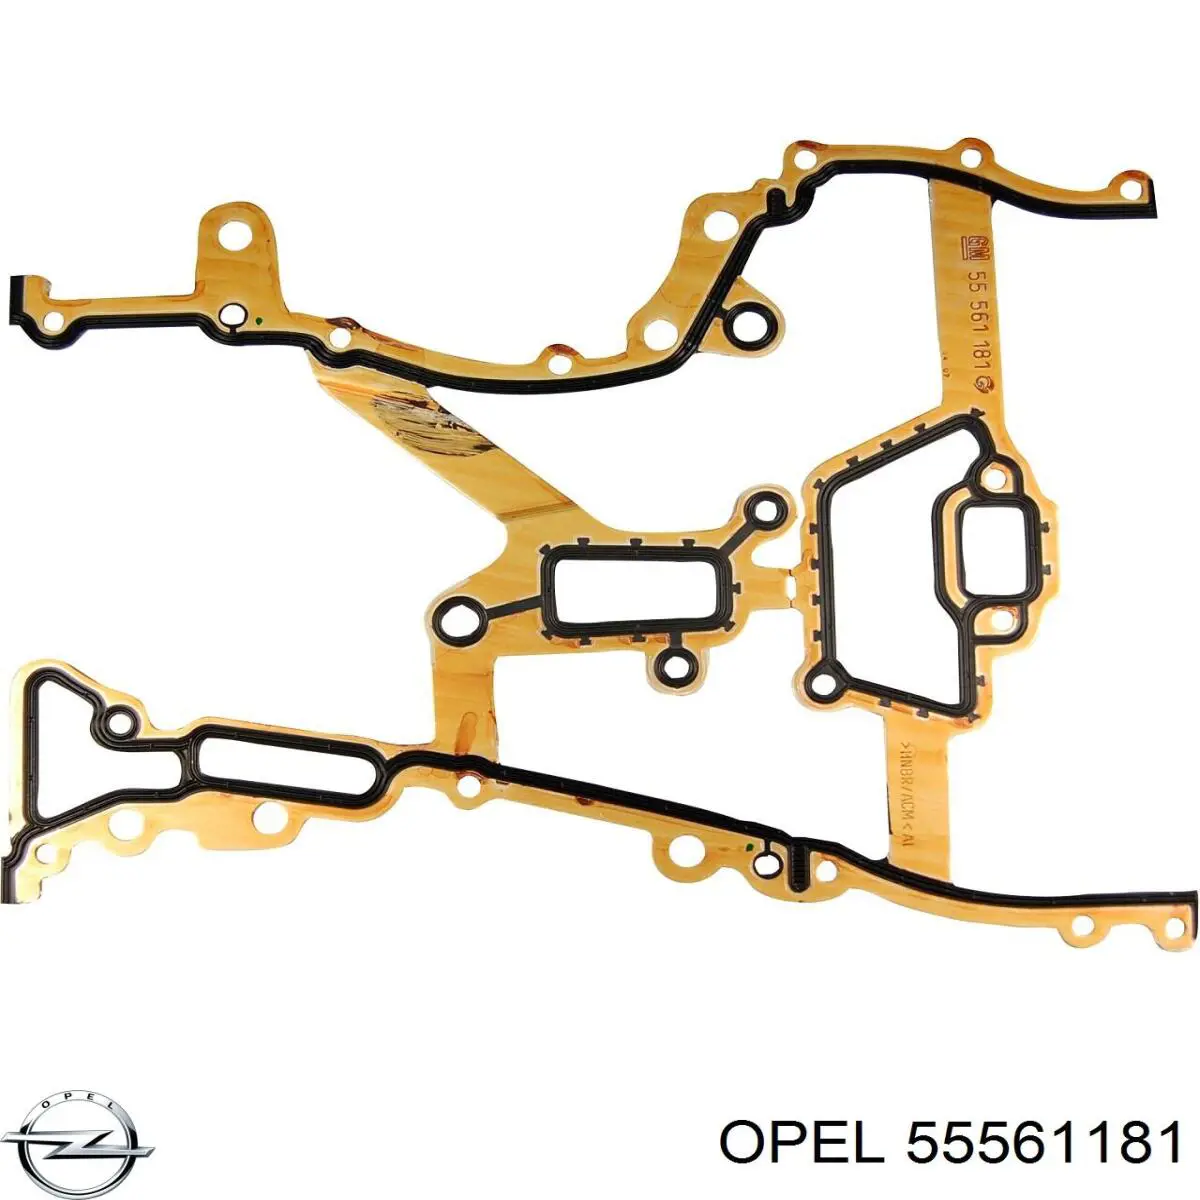 Прокладка передней крышки двигателя Opel 55561181